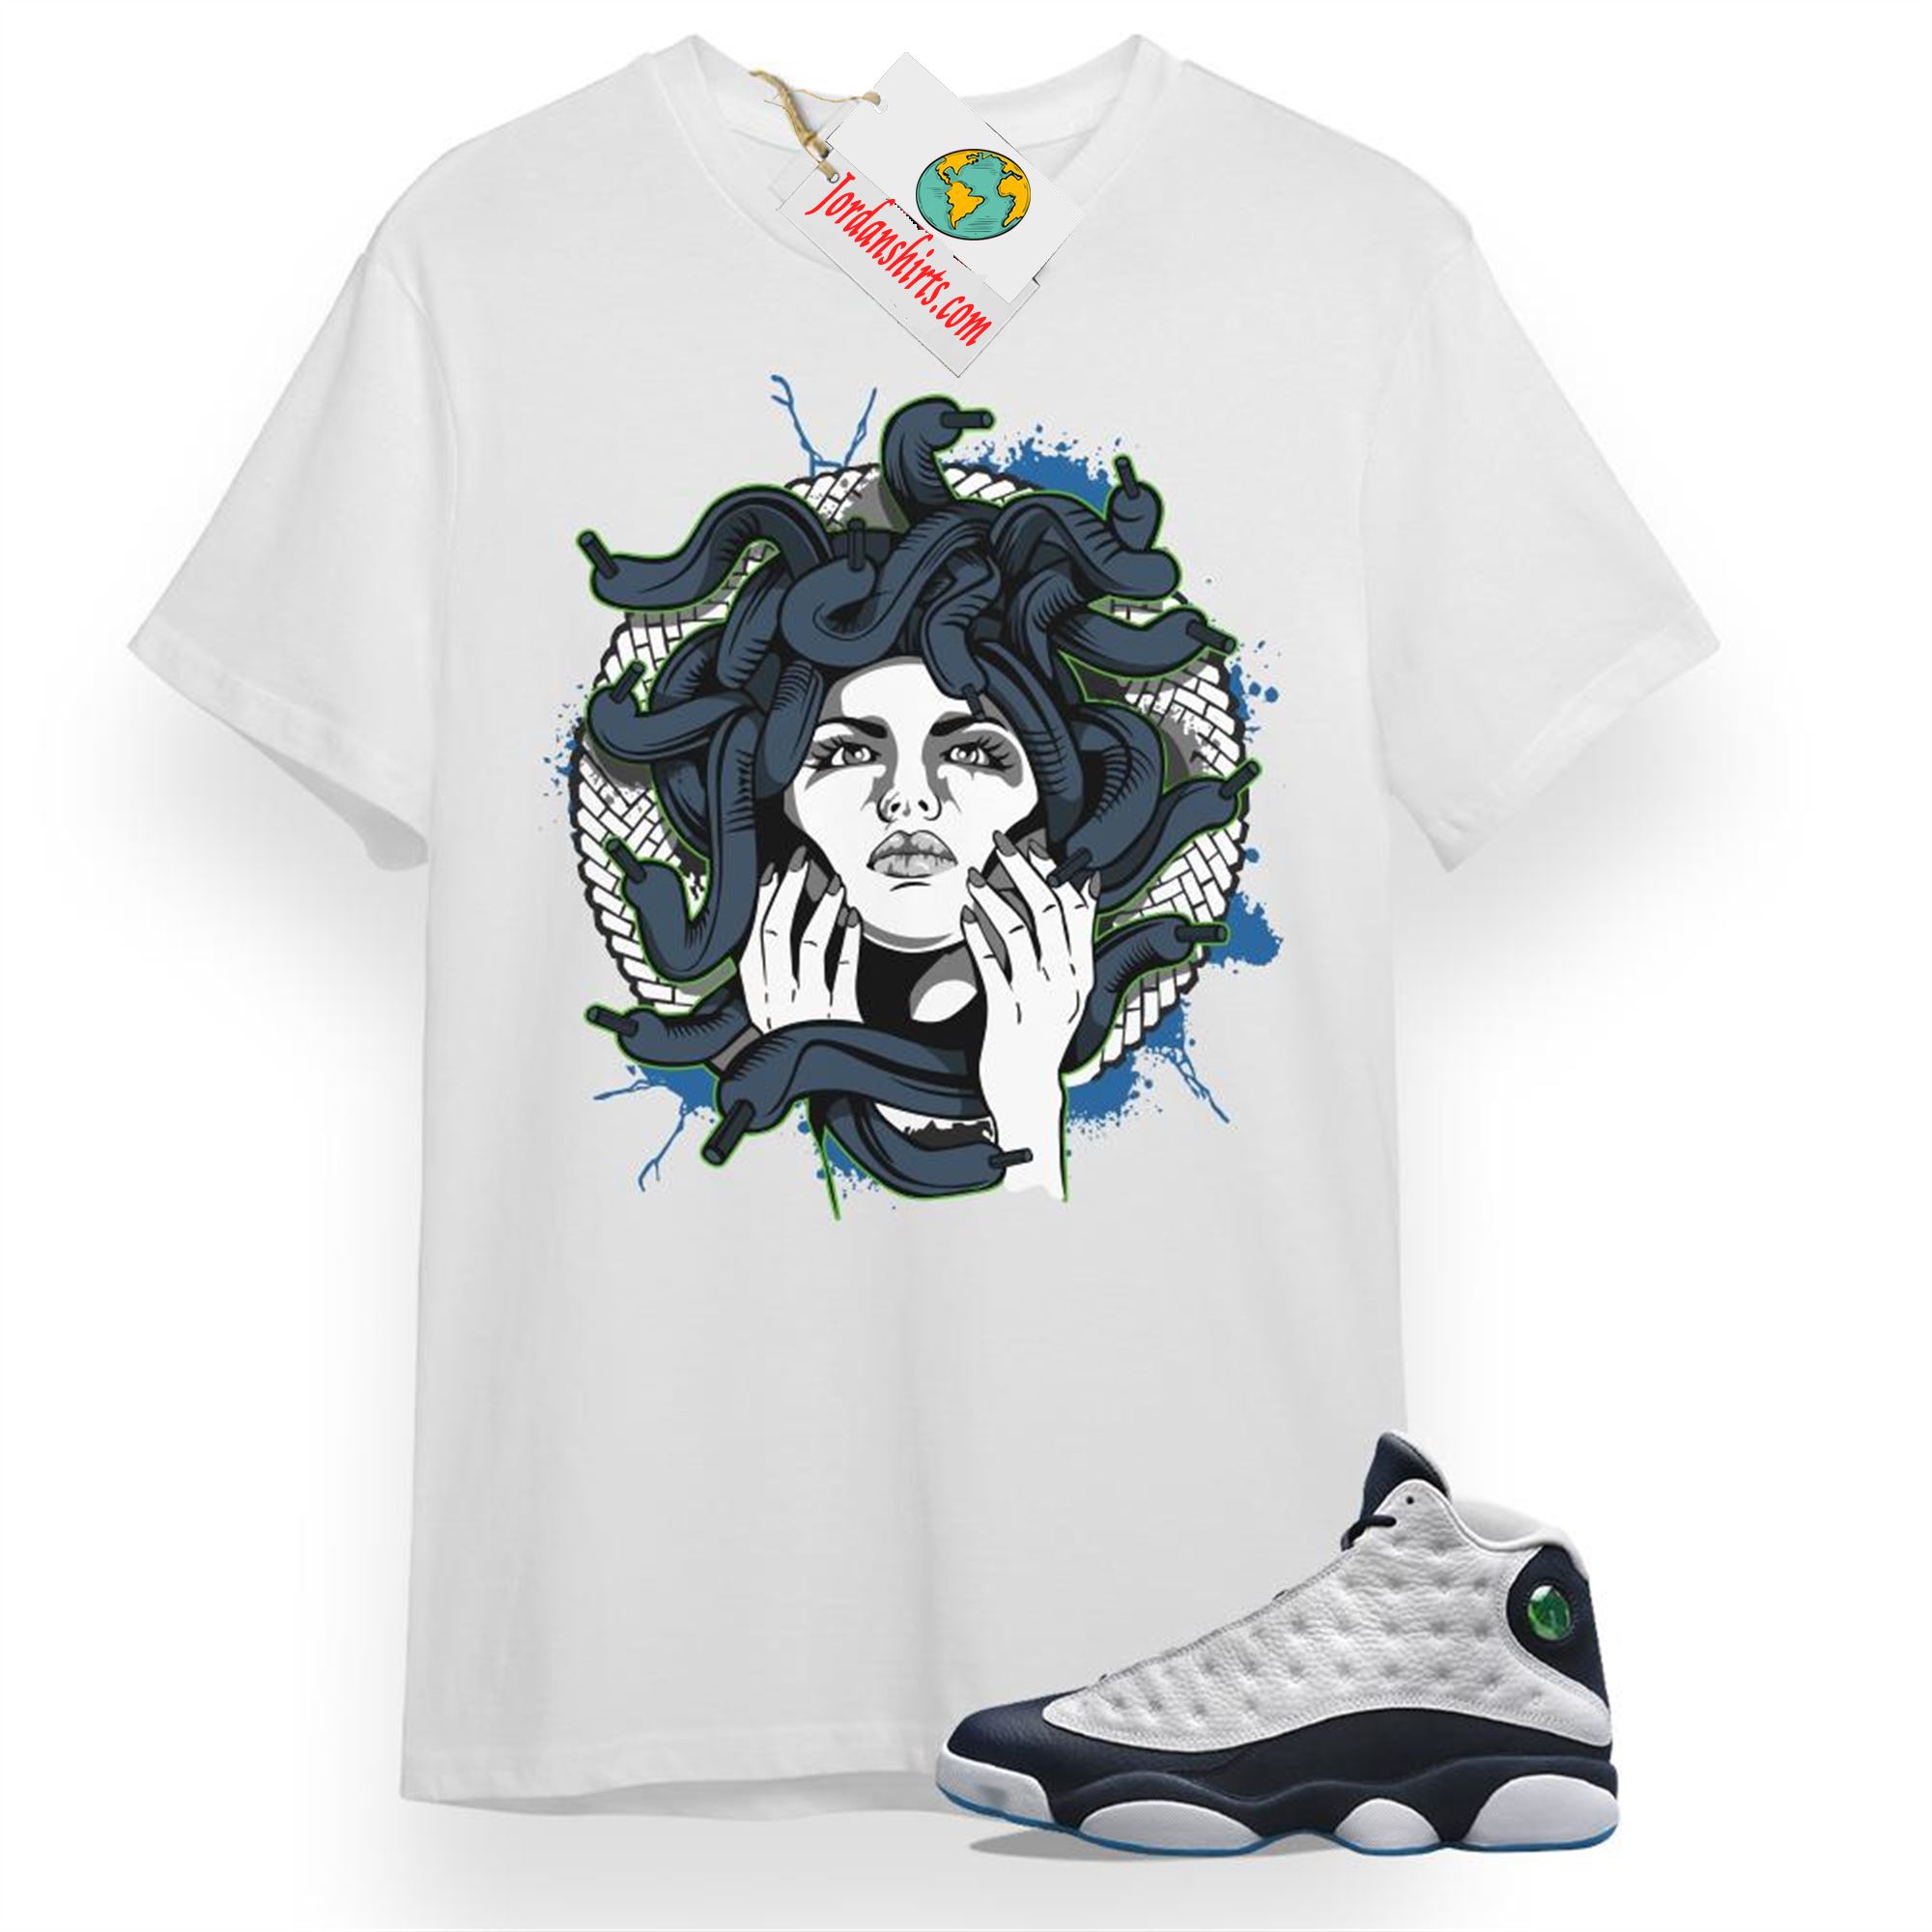 Jordan 13 Shirt, Medusa White T-shirt Air Jordan 13 Obsidian 13s Full Size Up To 5xl